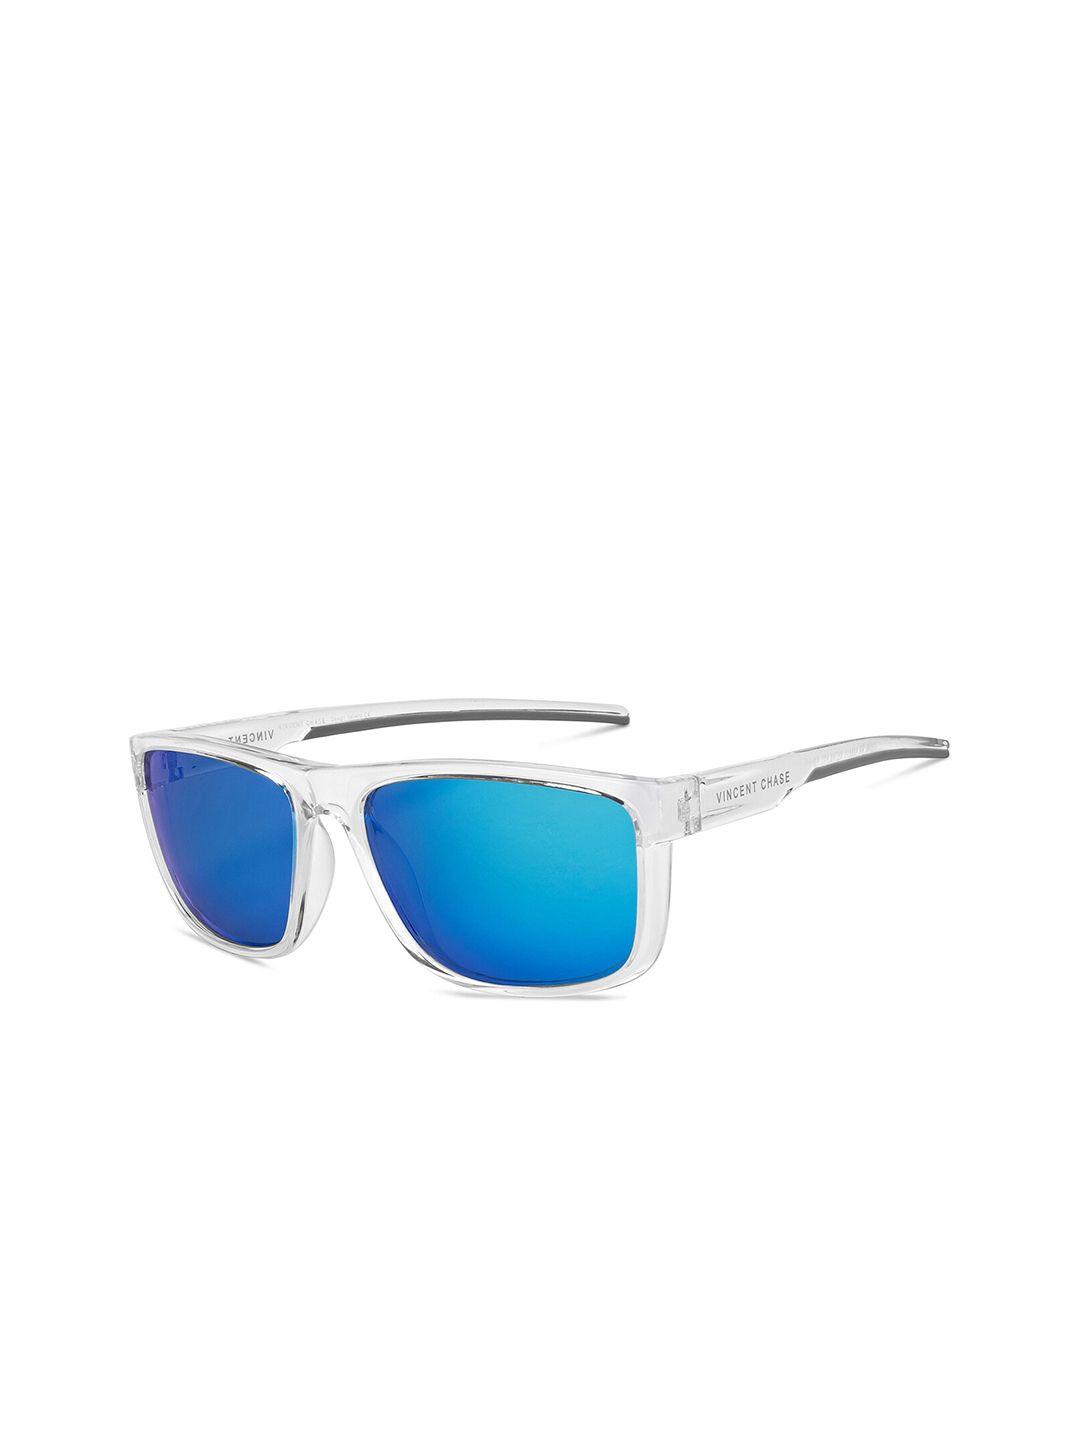 Vincent Chase Blue Lens & Transparent Wayfarer Sunglasses with UV Protected Lens-200513